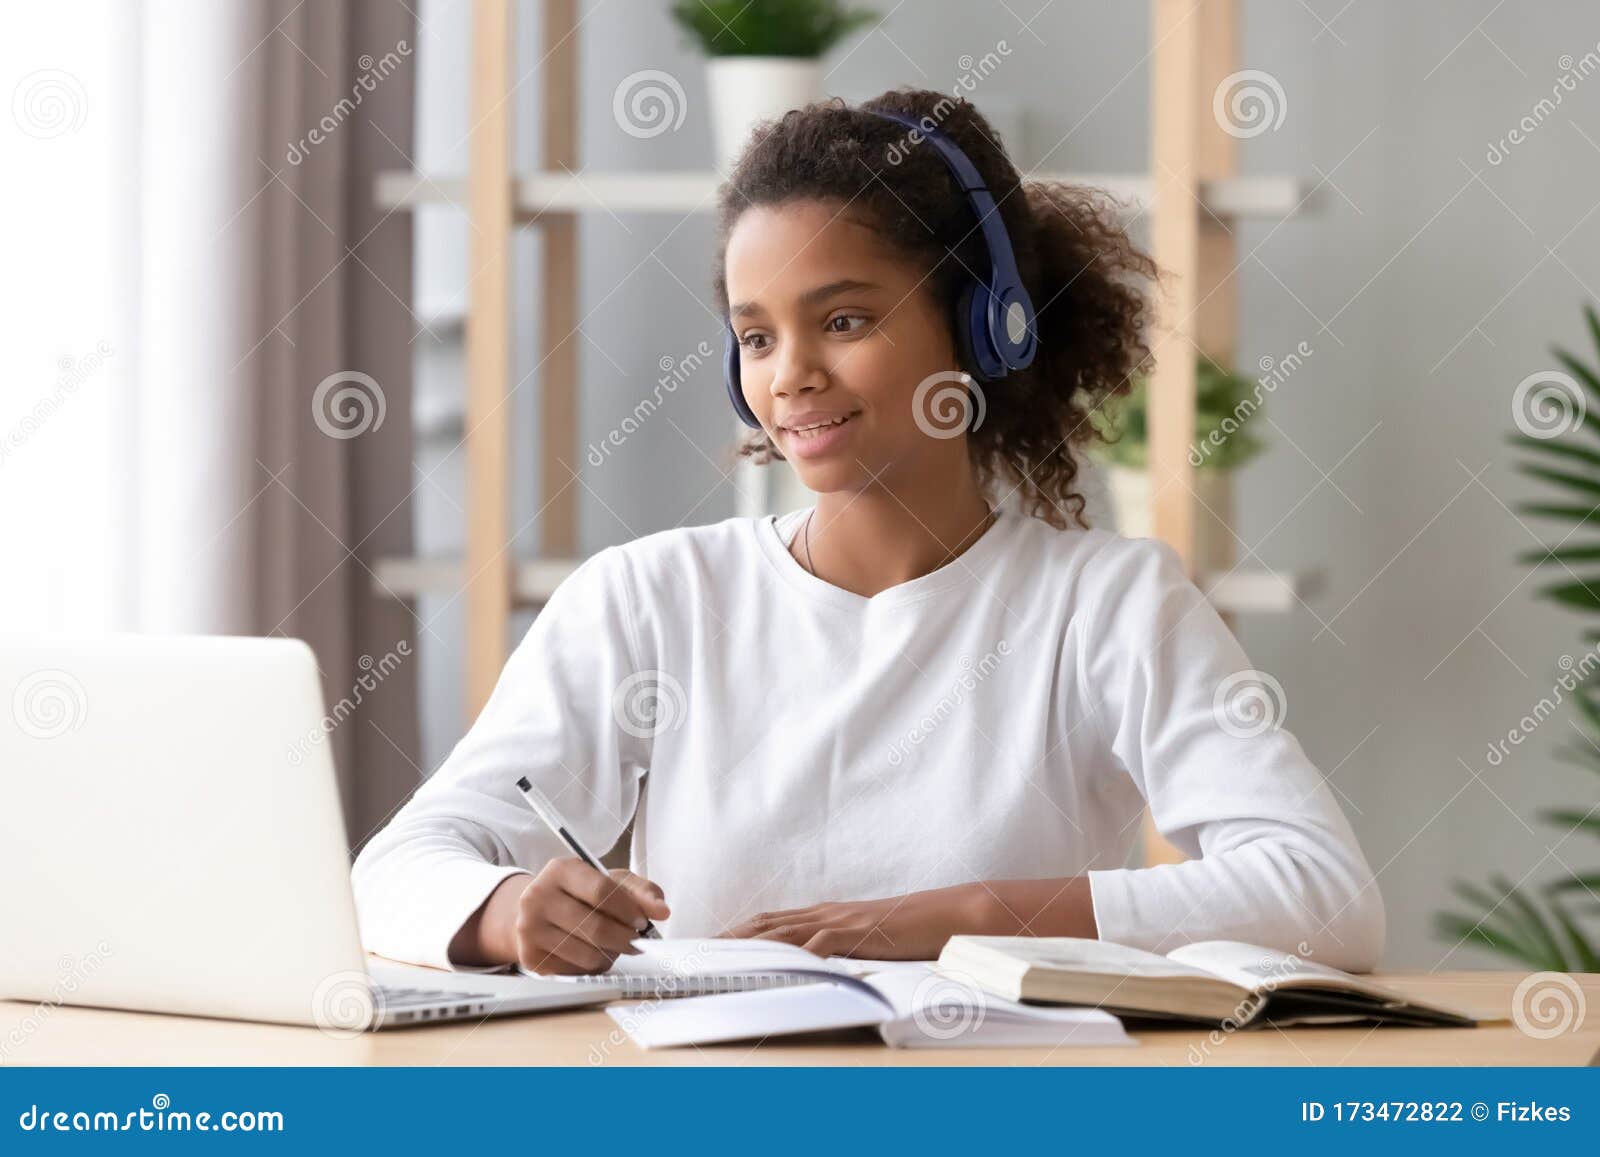 african girl wearing headphones study with skype teacher on laptop